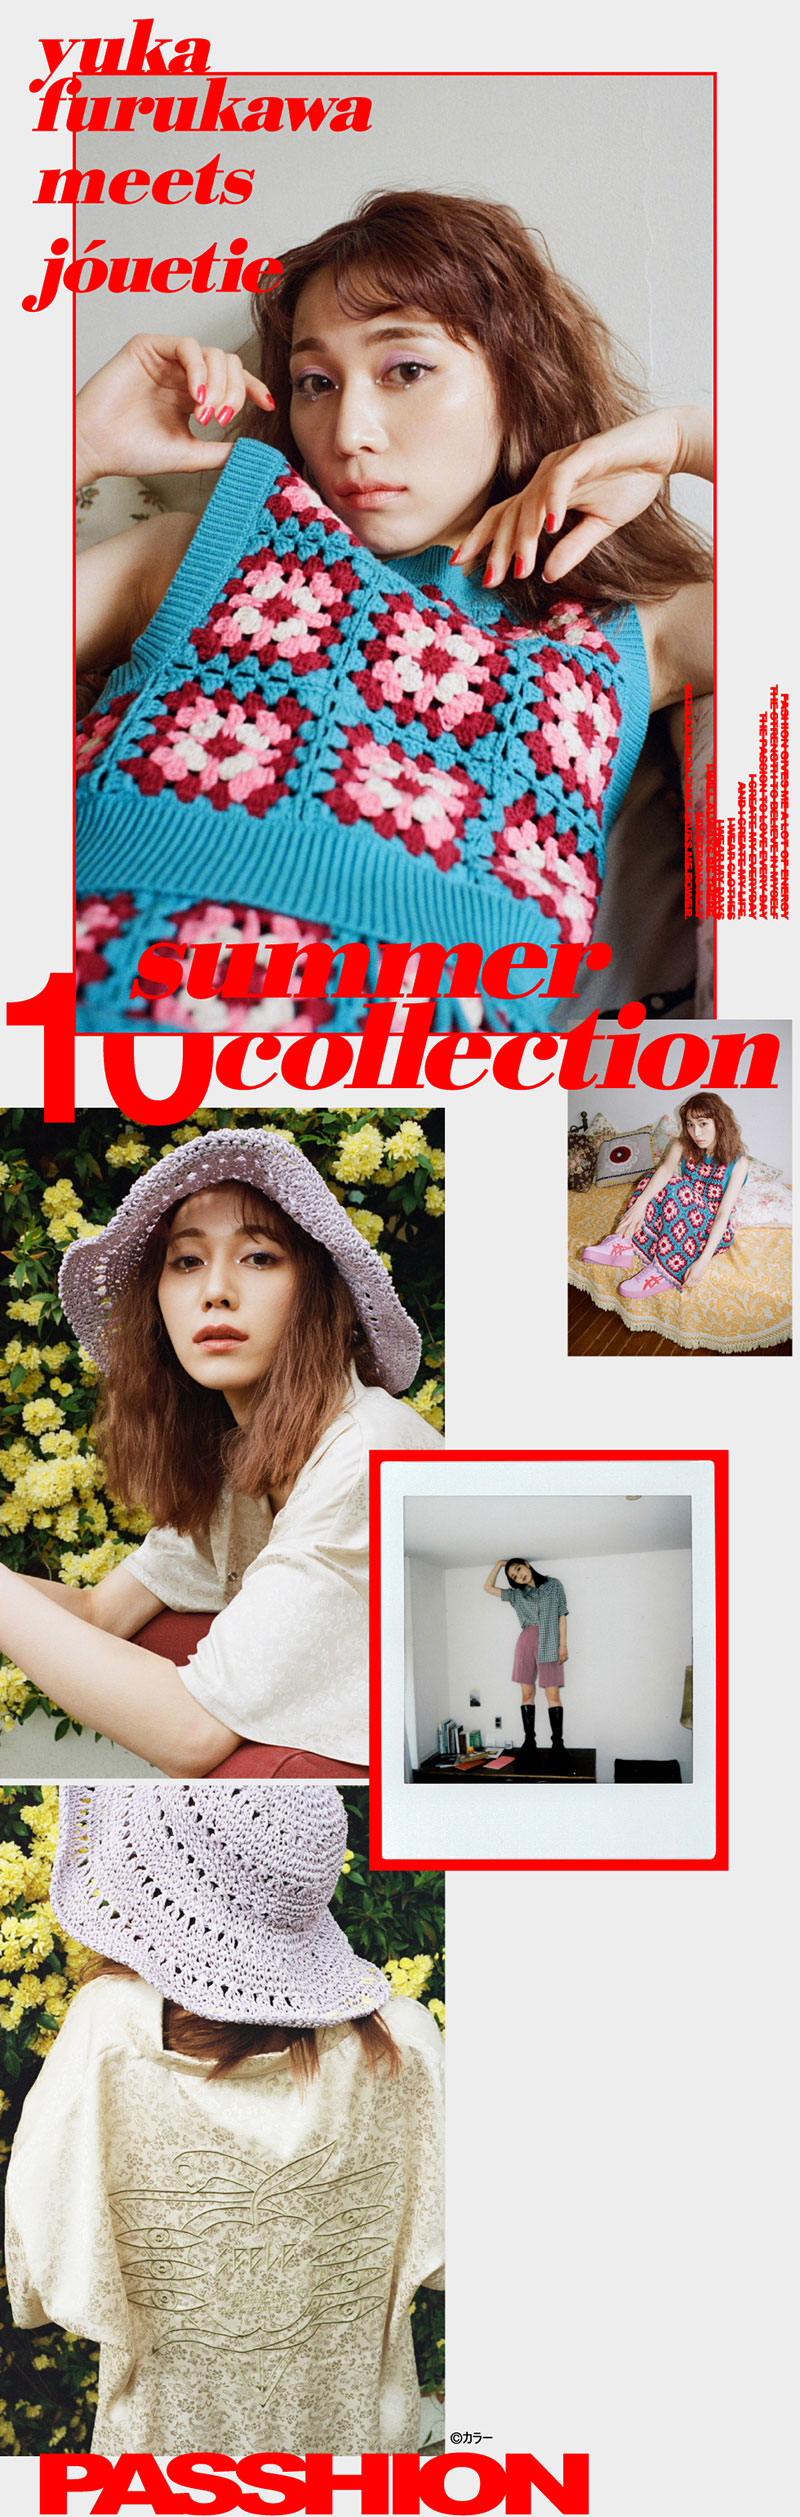 10 summer collection -yuka furukawa meets jouetie-1